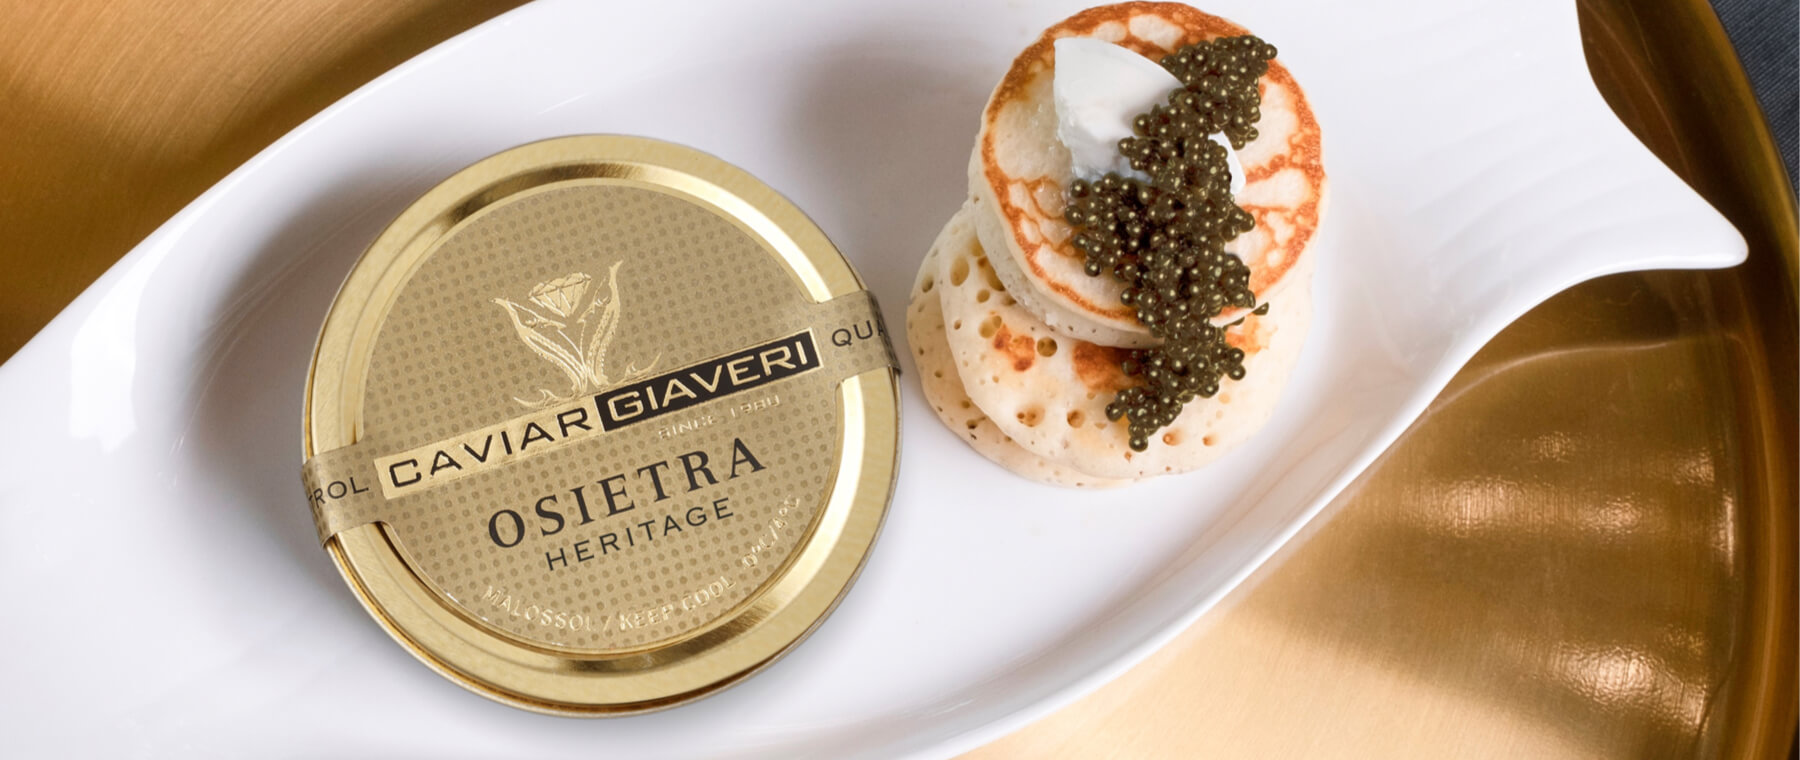 Caviale Osietra Heritage Caviar Giaveri